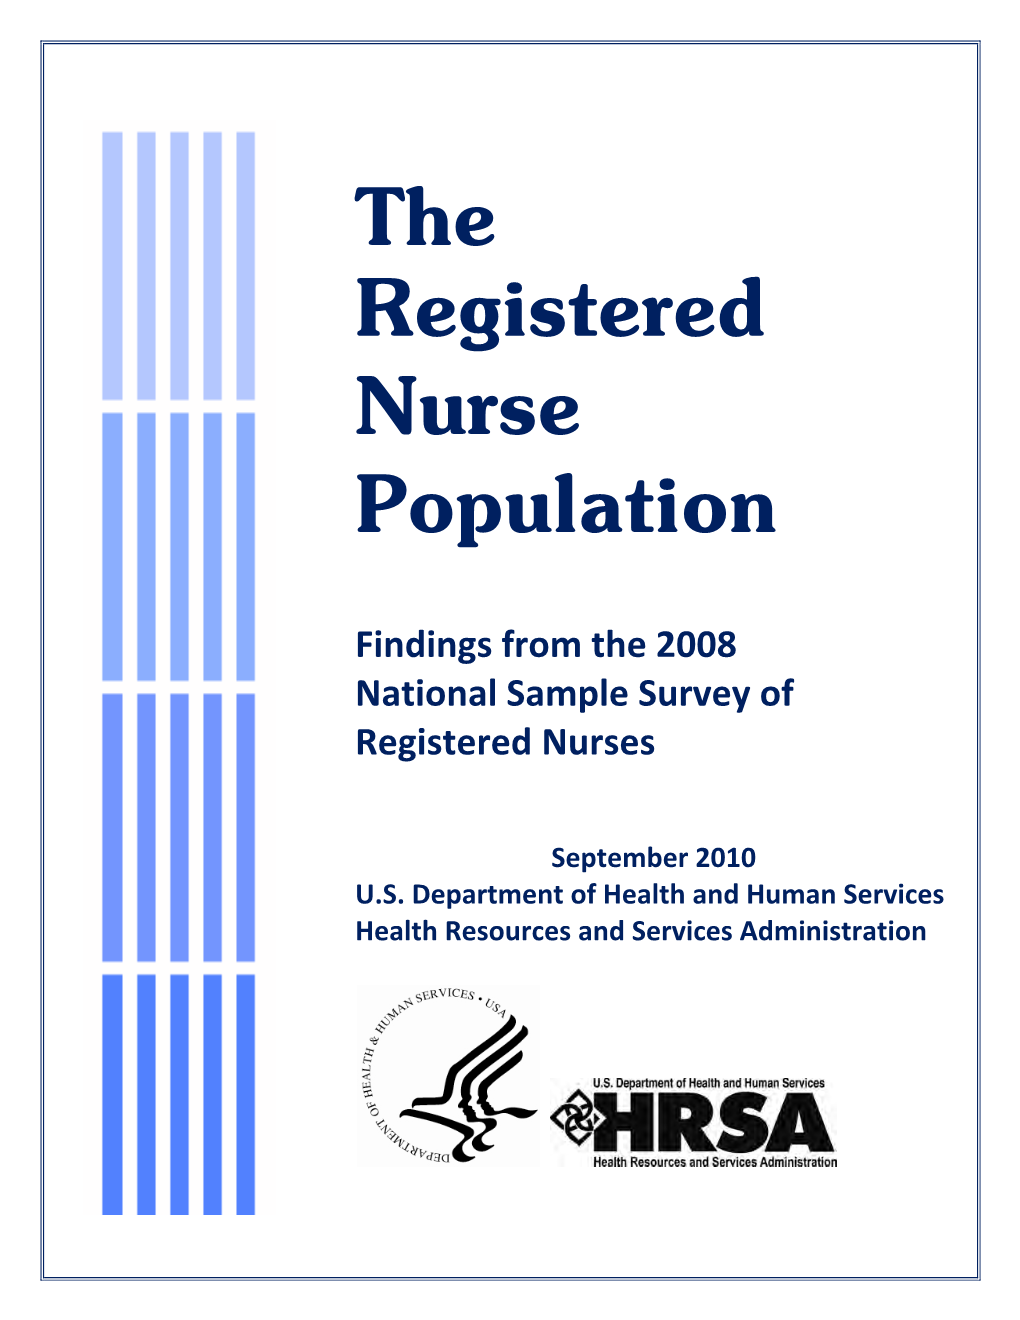 2008 National Sample Survey of Registered Nurses